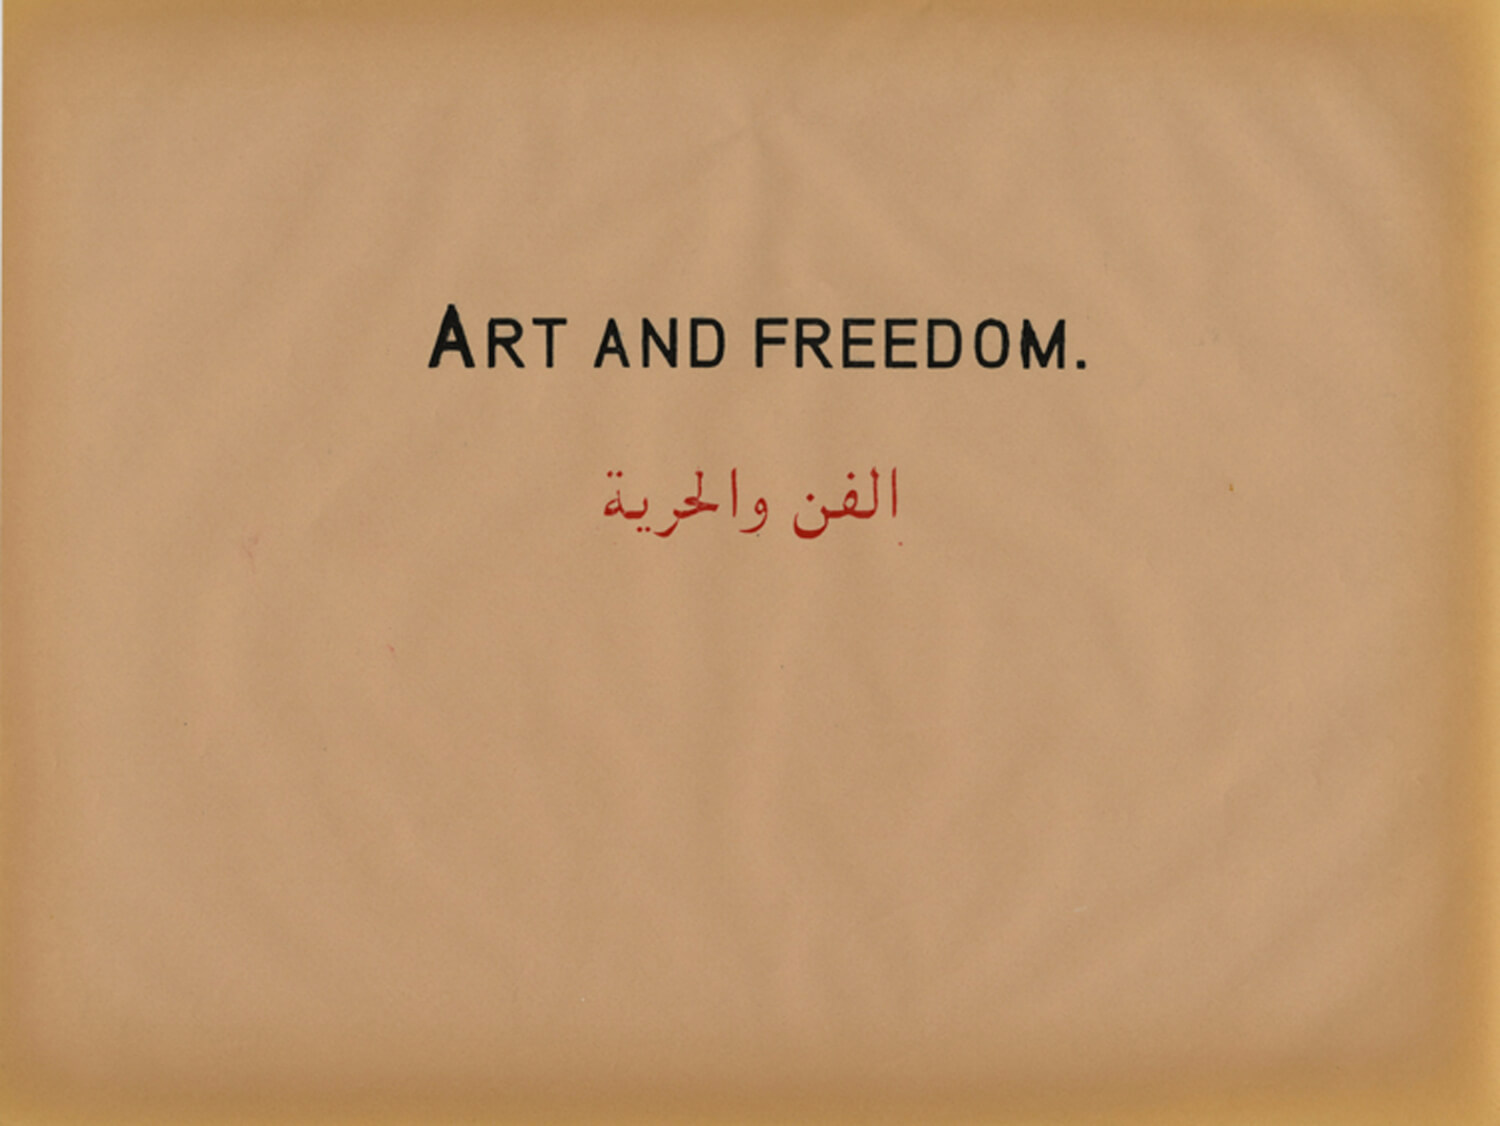  Art and Freedom, Prestige of Terror, 2010, Work on paper, 22 x 28 cm 